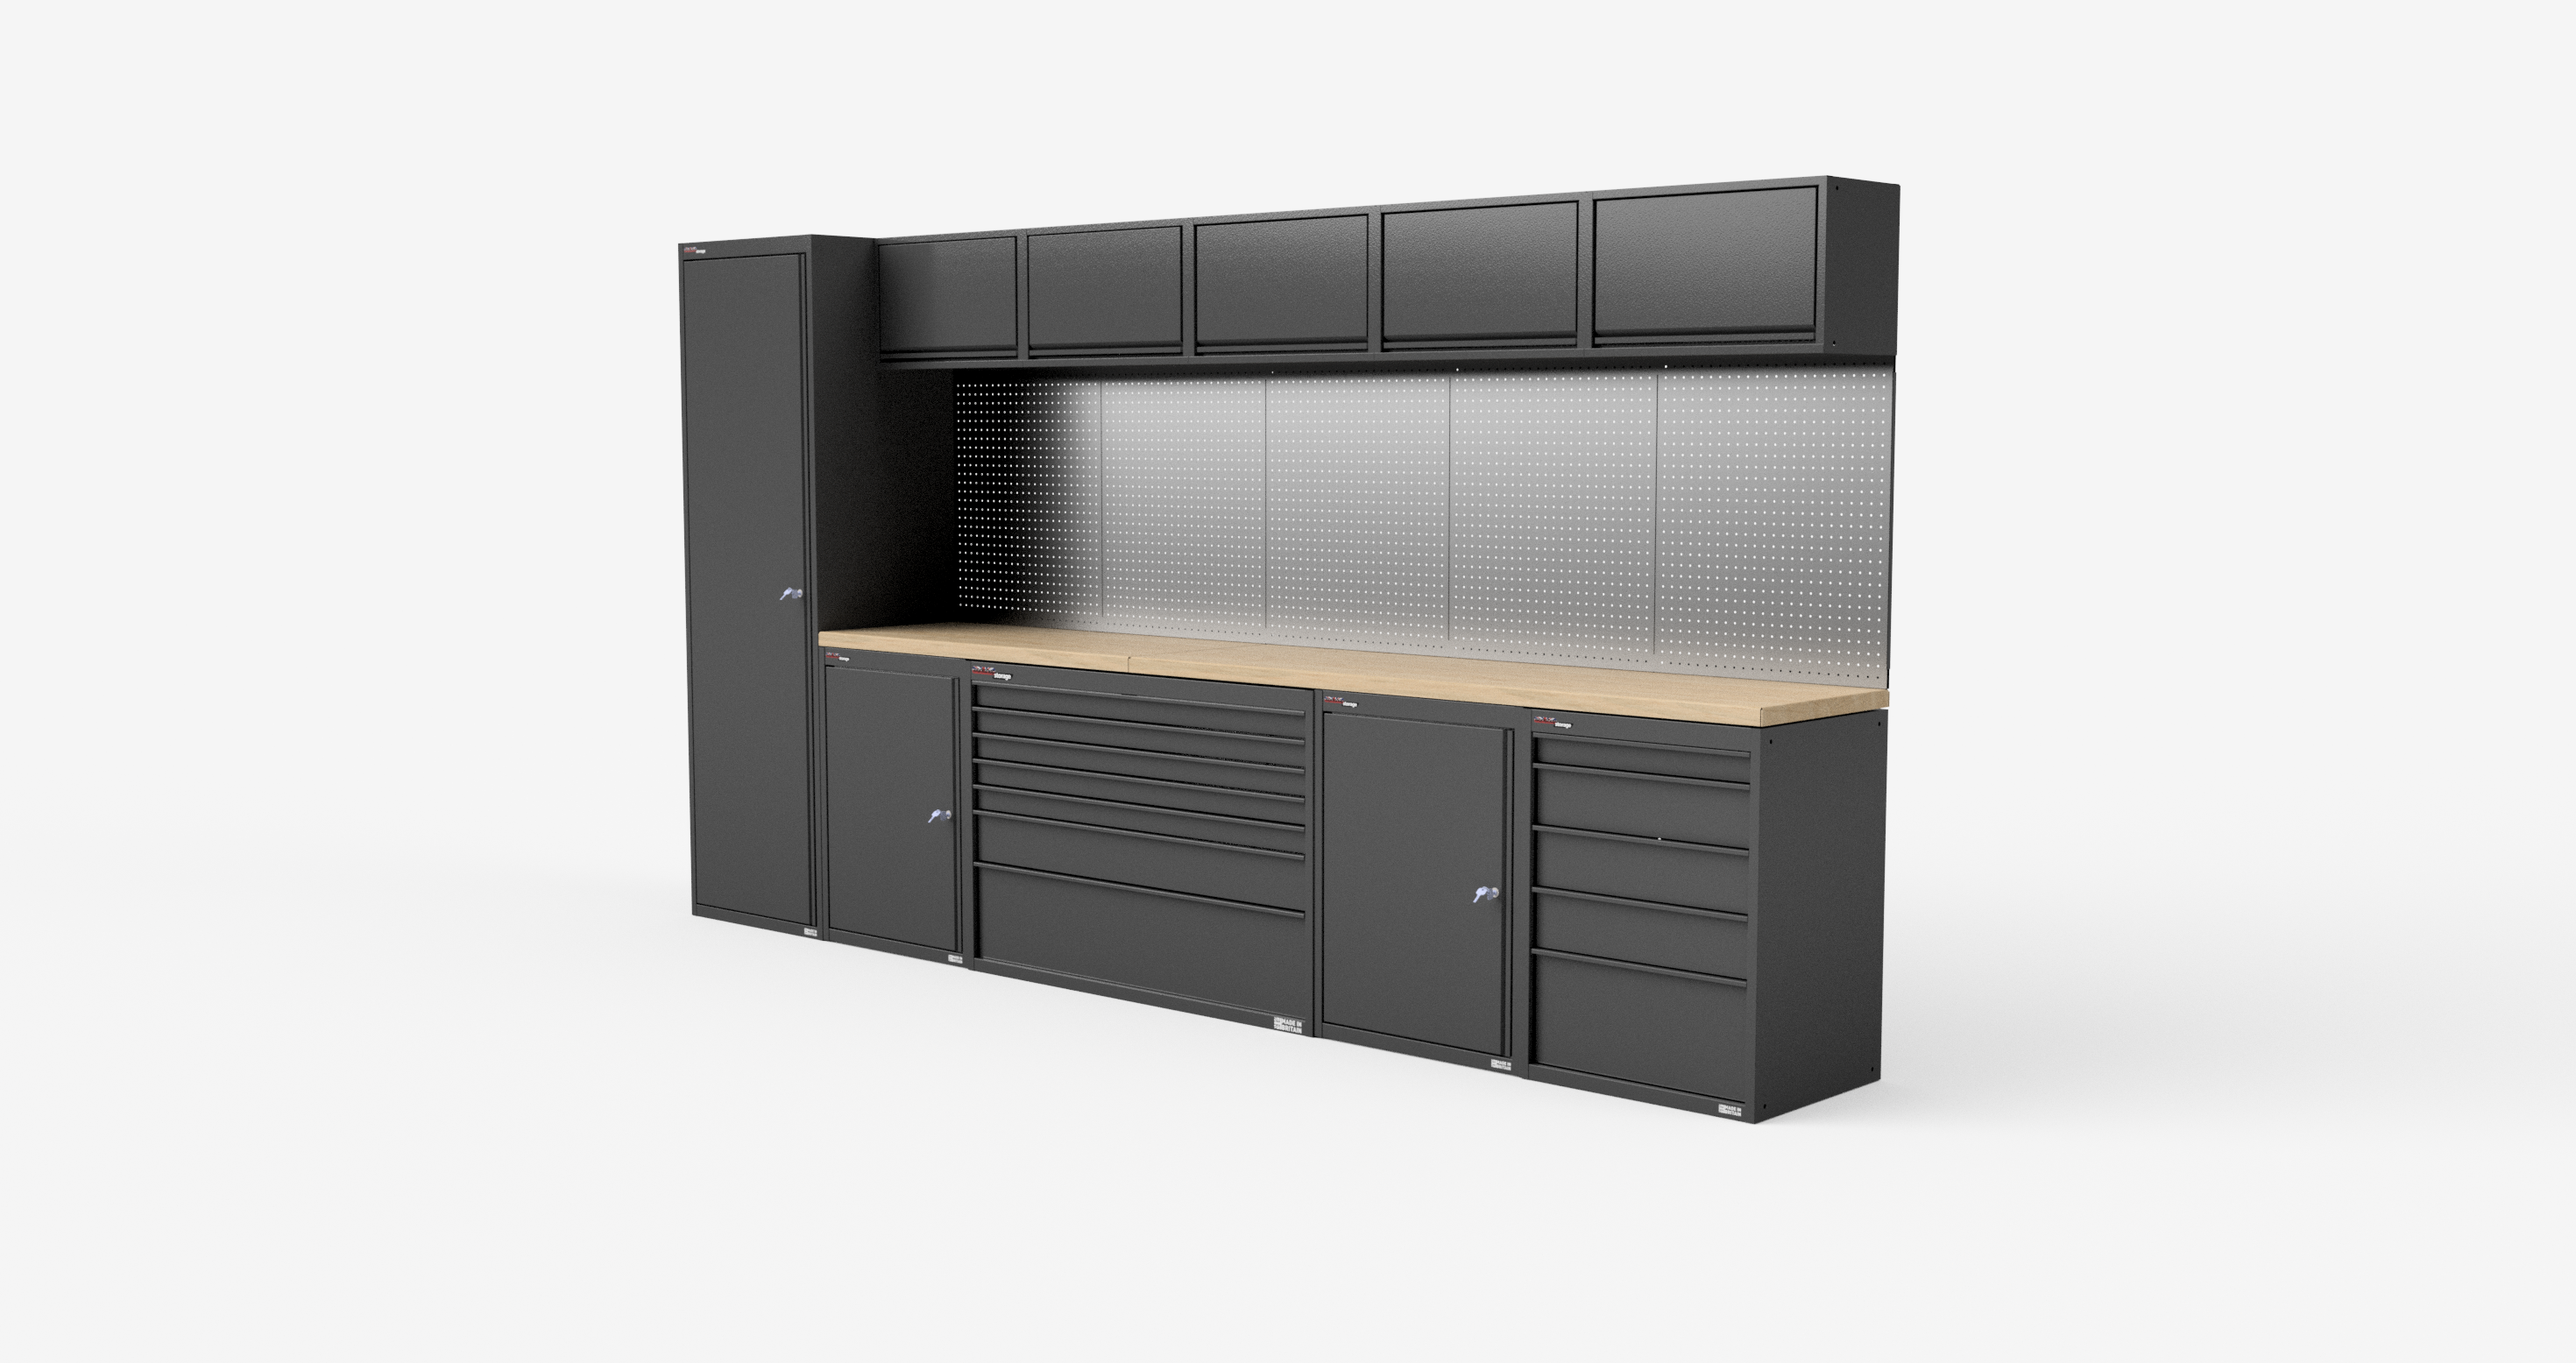 3.1m Workshop Storage Configurations